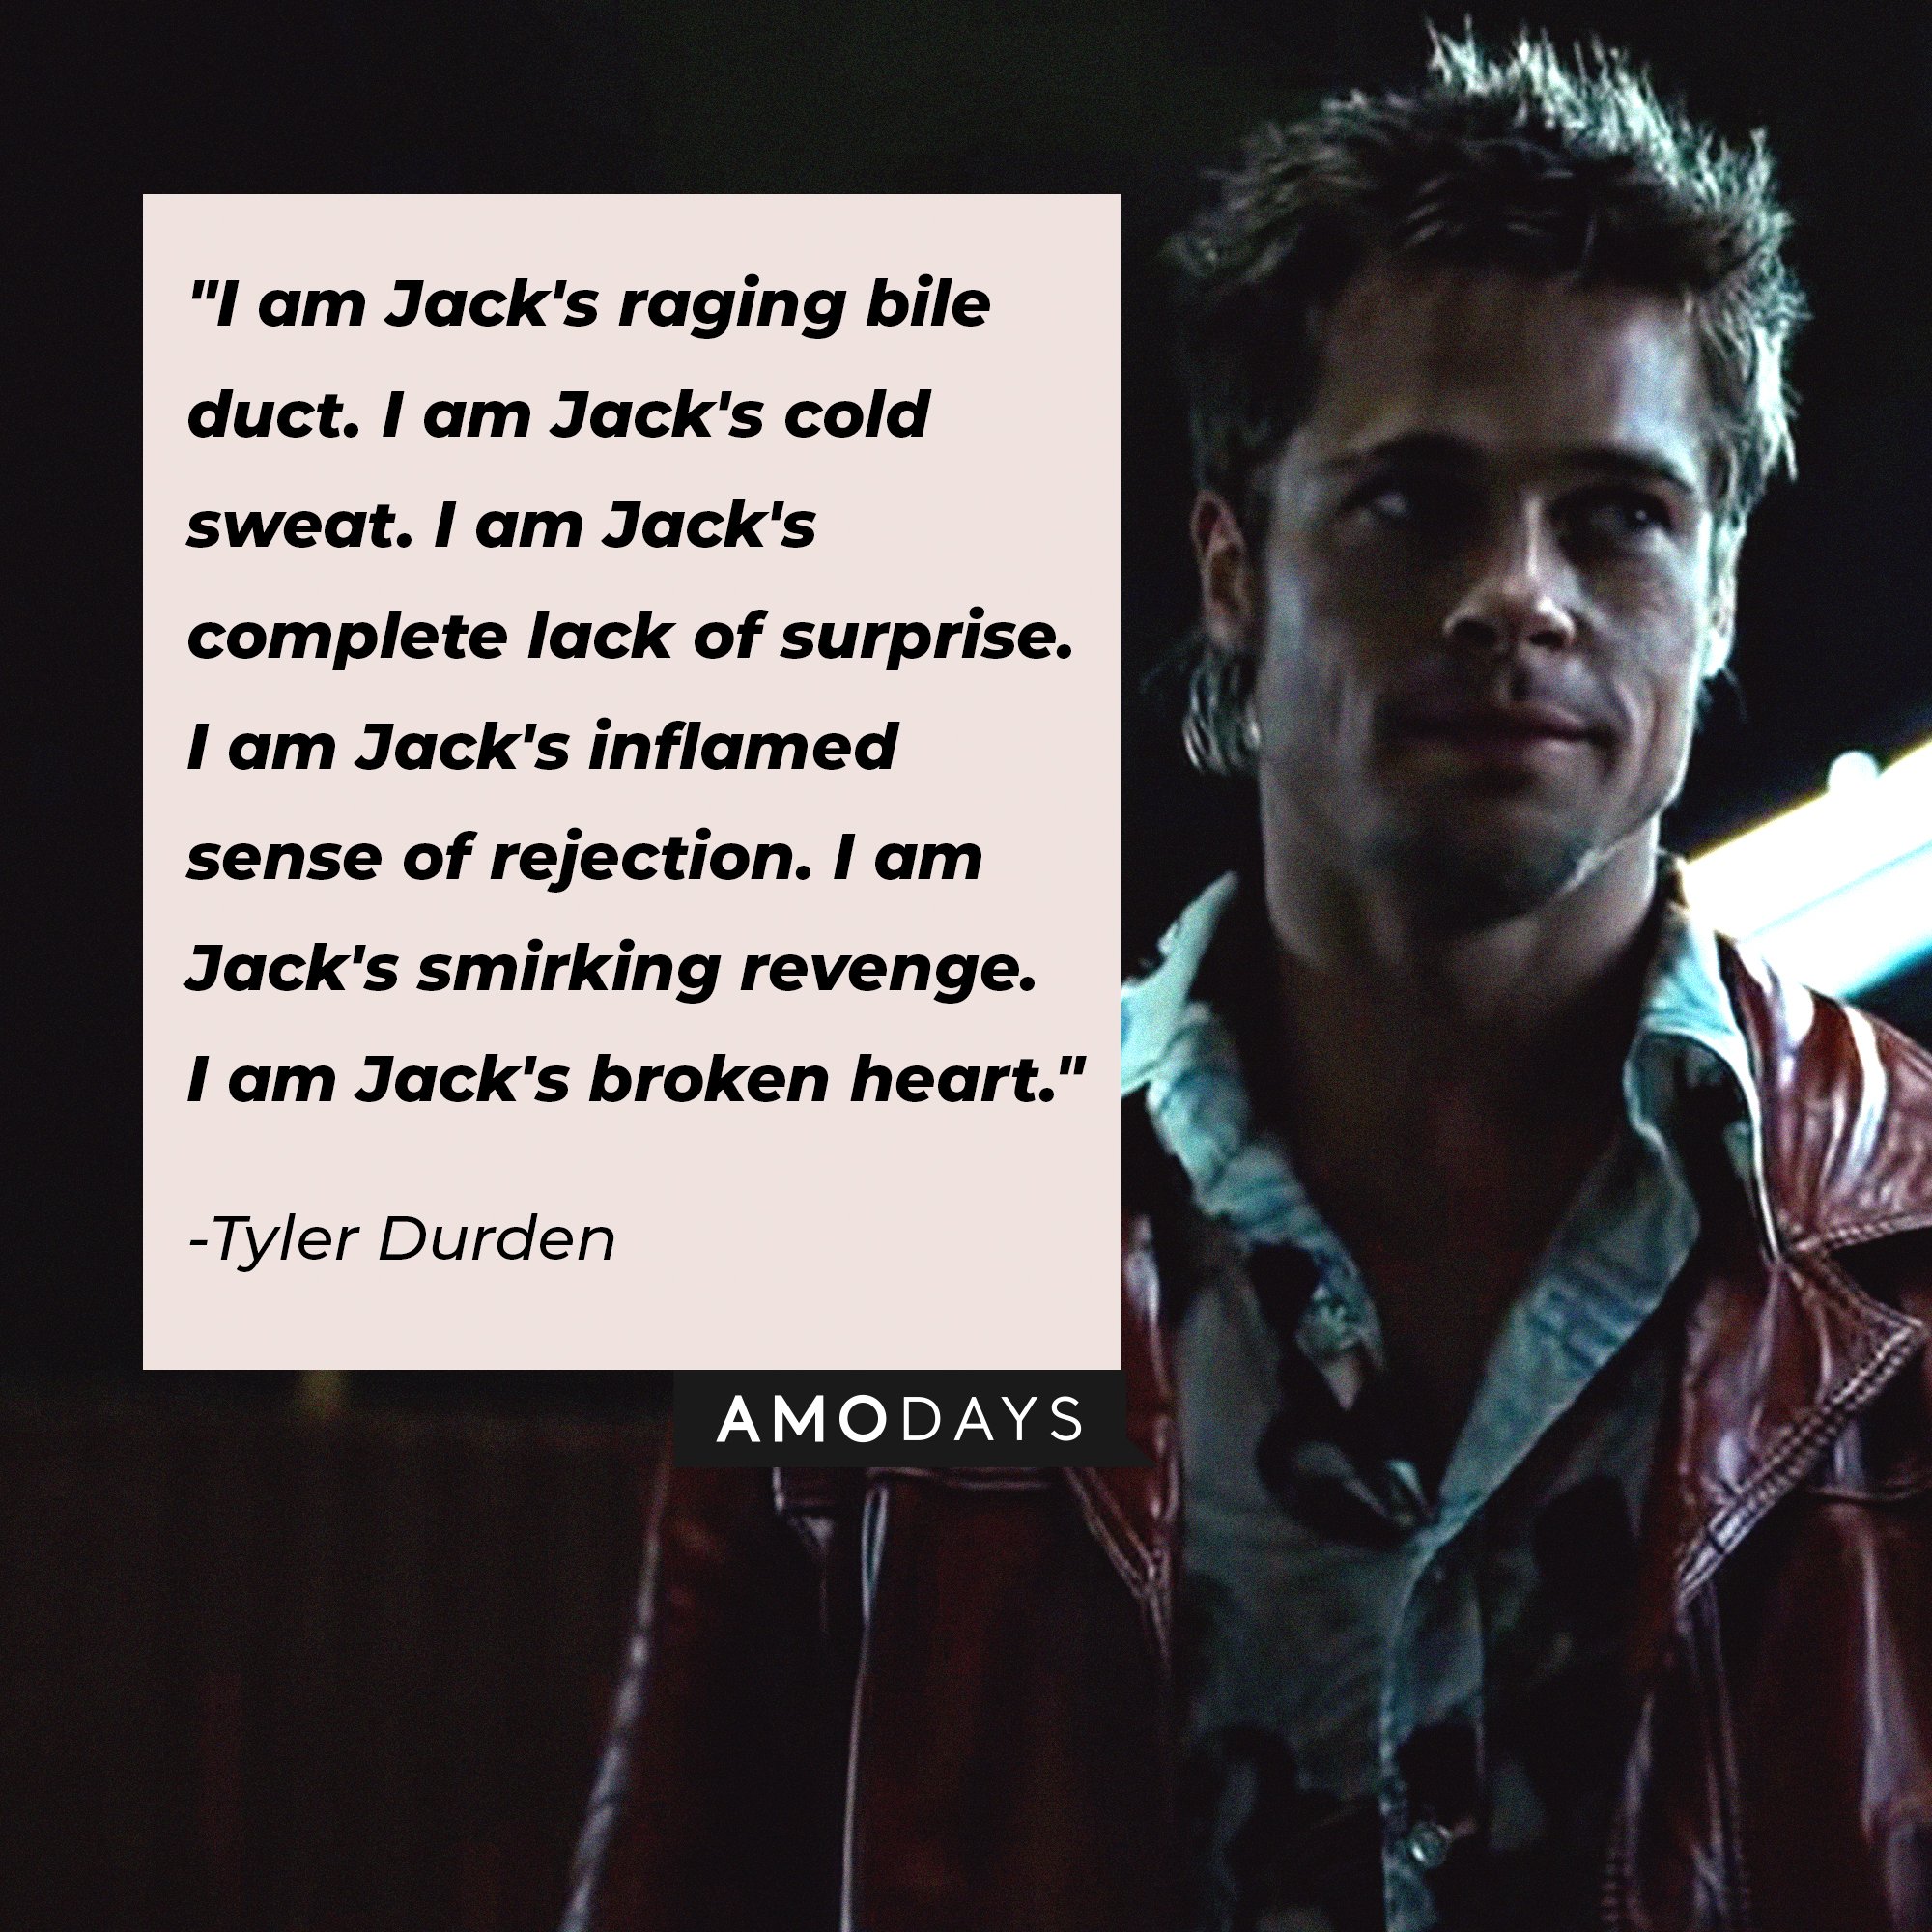 Tyler Durden's quote: "I am Jack's raging bile duct. I am Jack's cold sweat. I am Jack's complete lack of surprise. I am Jack's inflamed sense of rejection. I am Jack's smirking revenge. I am Jack's broken heart.” | Image: AmoDays